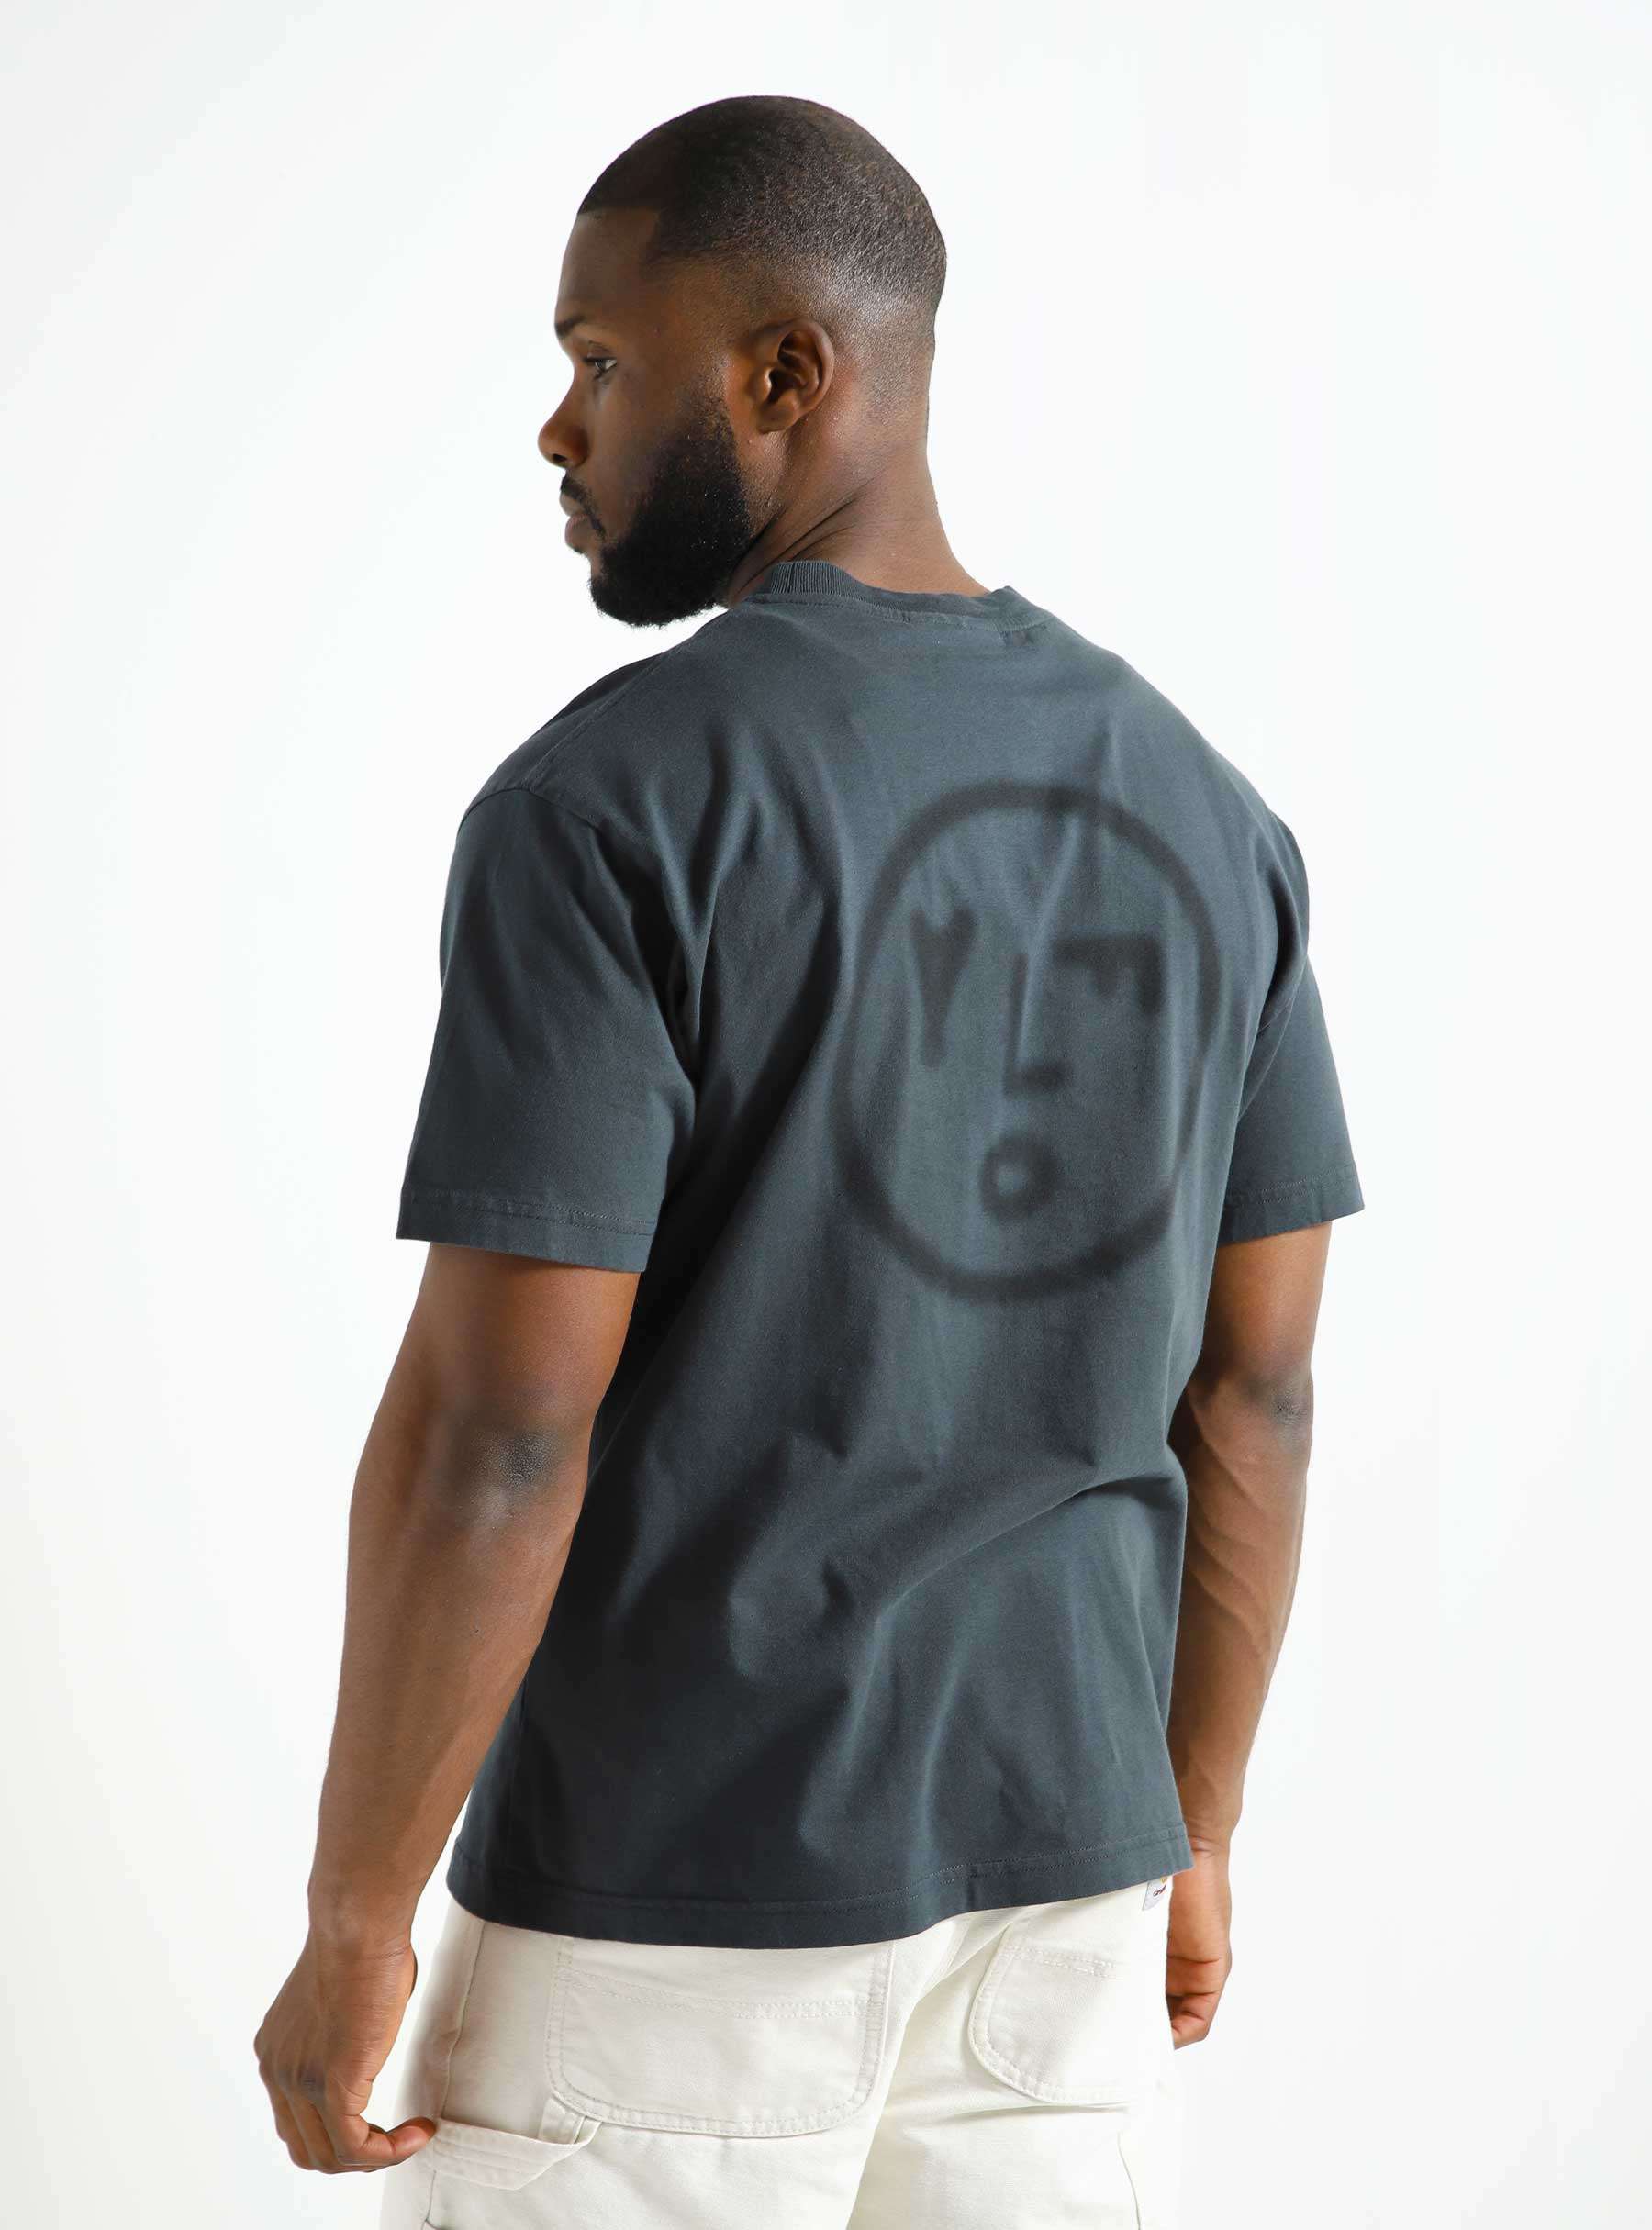 Blur Face T-shirt Slate Grey M150102